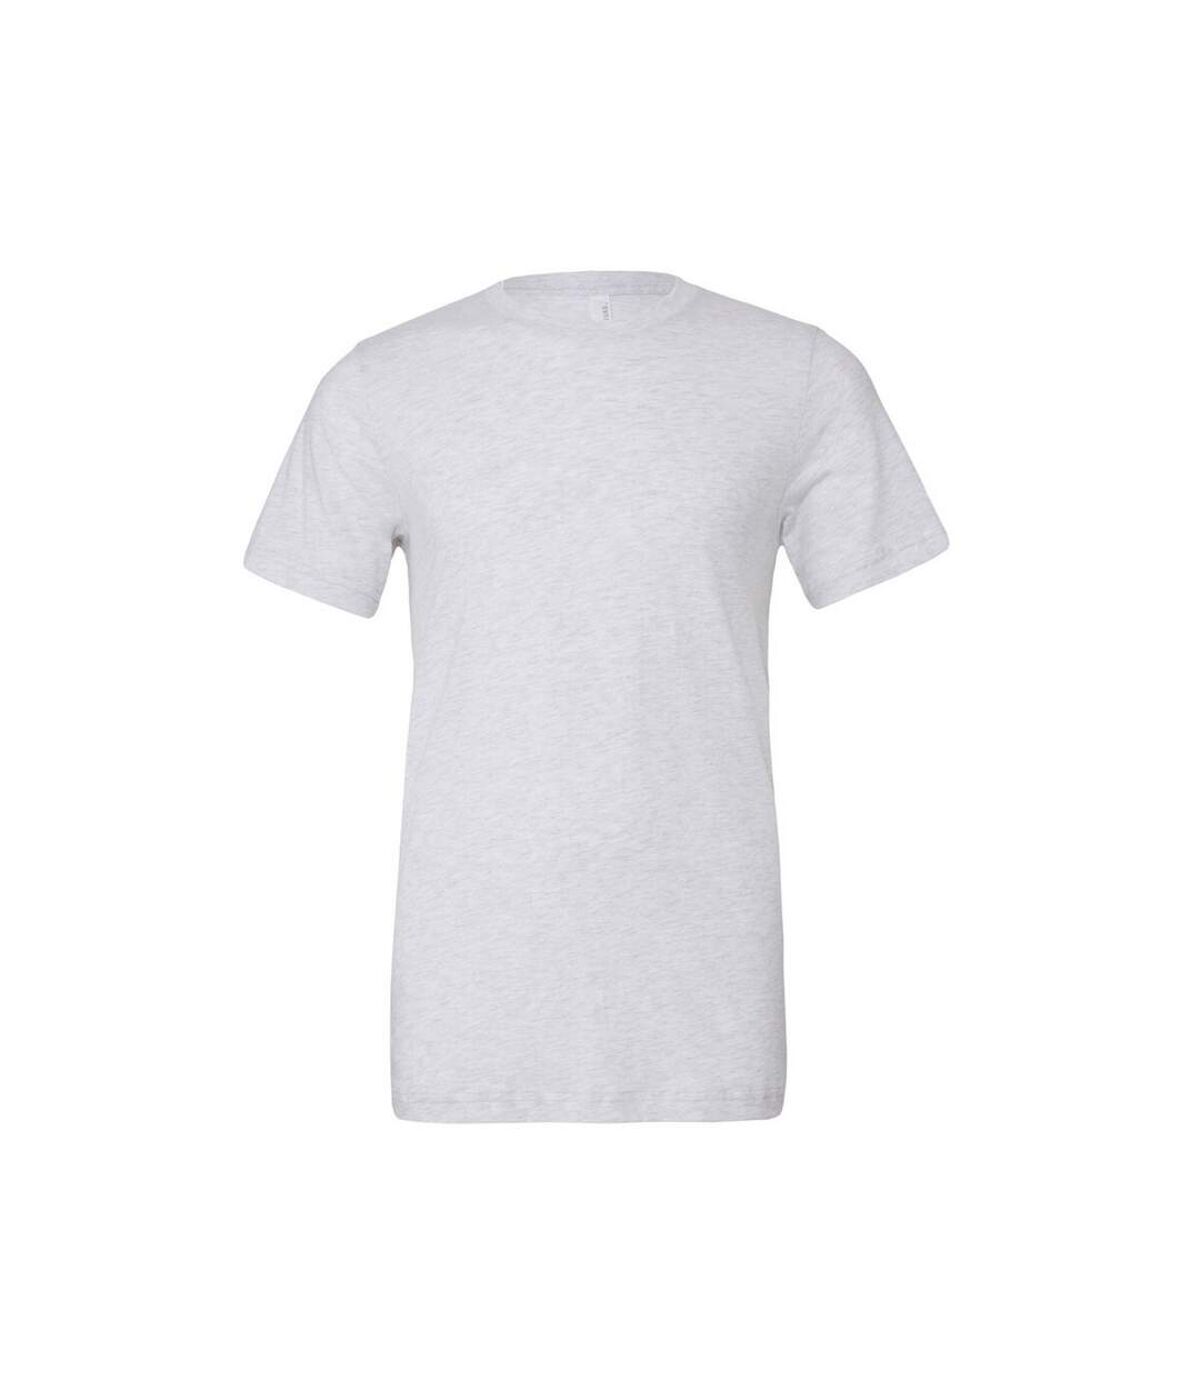 Canvas Triblend Crew Neck T-Shirt / Mens Short Sleeve T-Shirt (White Fleck Triblend) - UTBC168